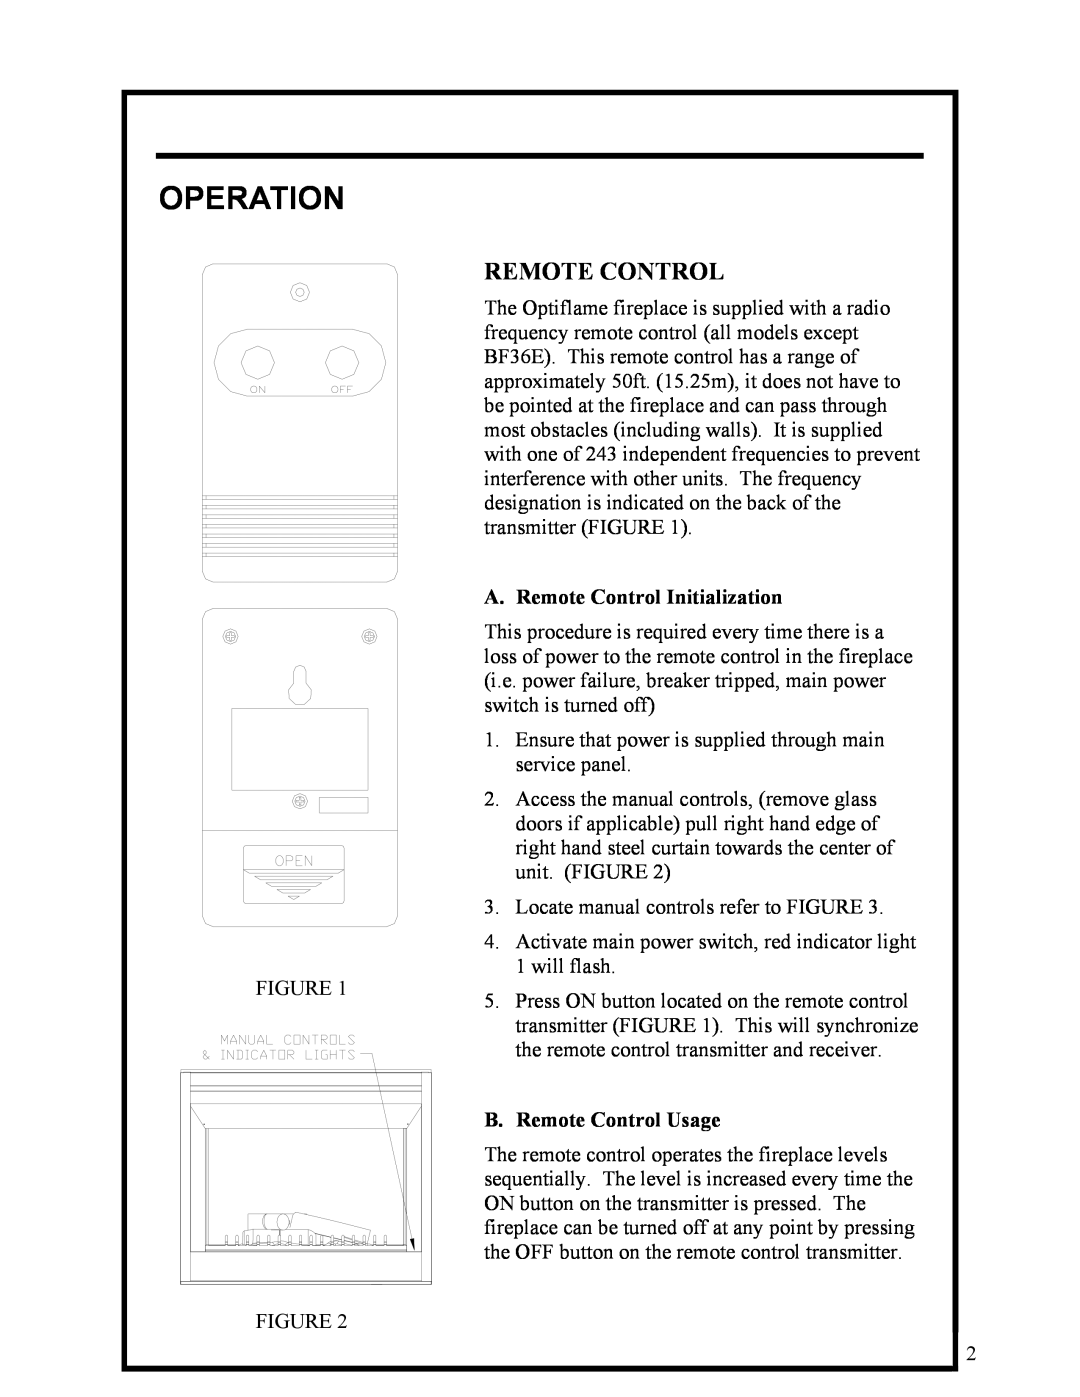 Dimplex Electric Fireplace manual Operation, A. Remote Control Initialization, B. Remote Control Usage 